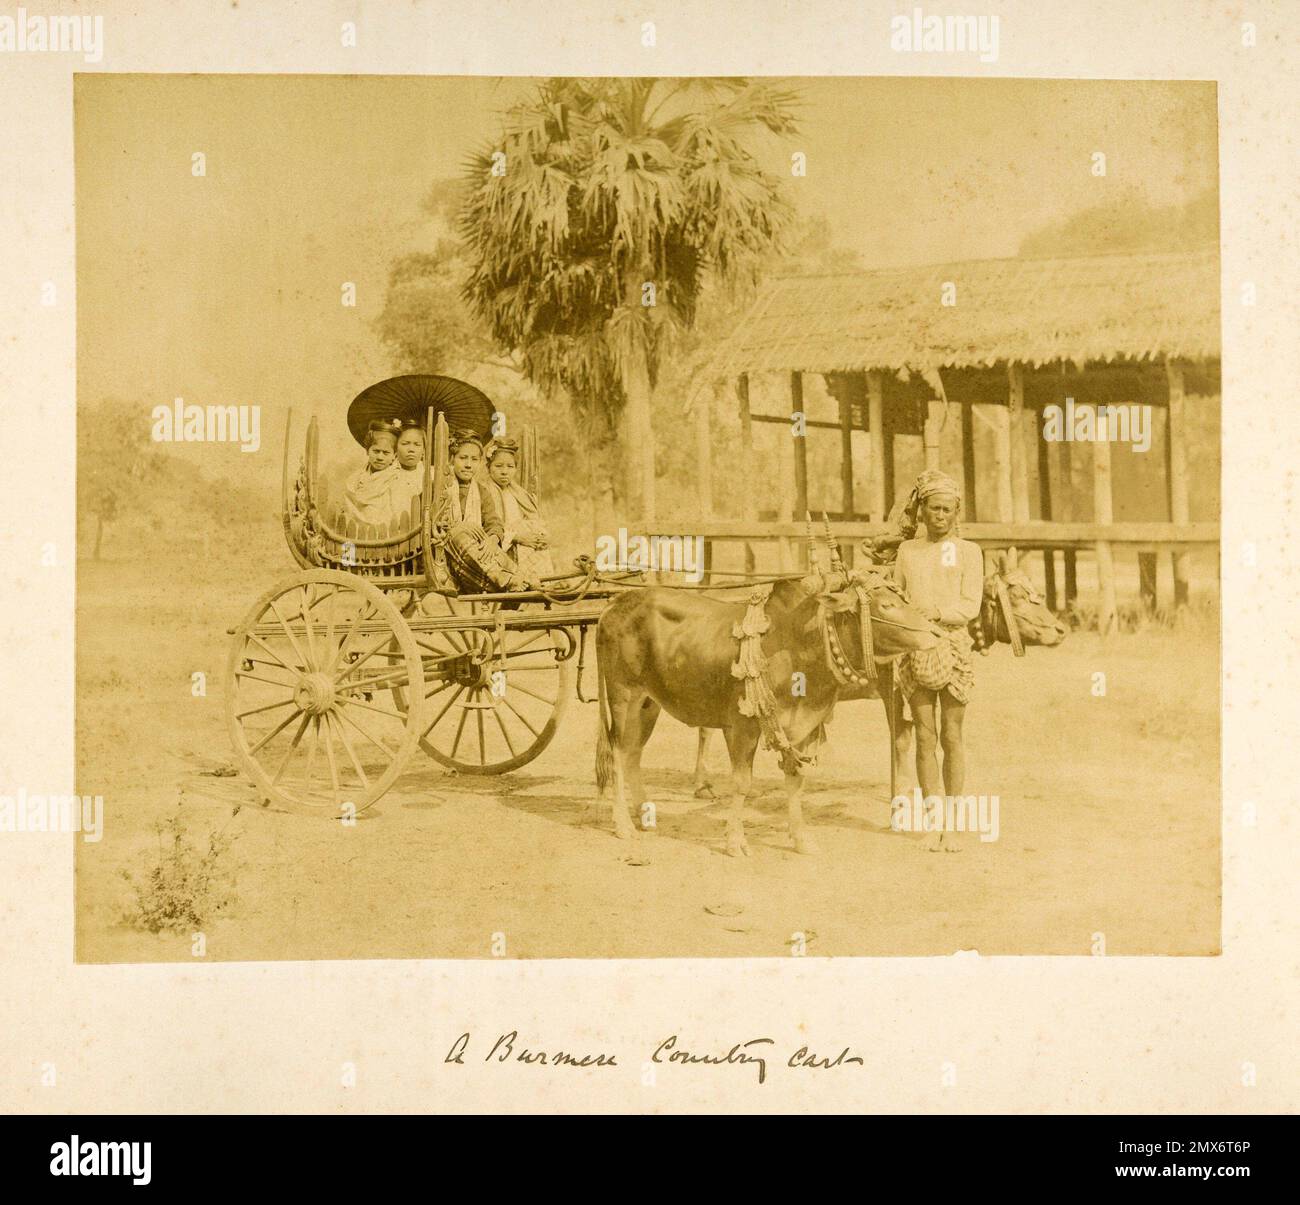 Der birmanische Landkarren. Jahrgang 1900, aufgenommen 1885 von Felice Beato, dem burmesischen öffentlichen Wagen. Album der birmanischen öffentlichen Verkehrsmittel; Felice Beato, 1832 - Stockfoto